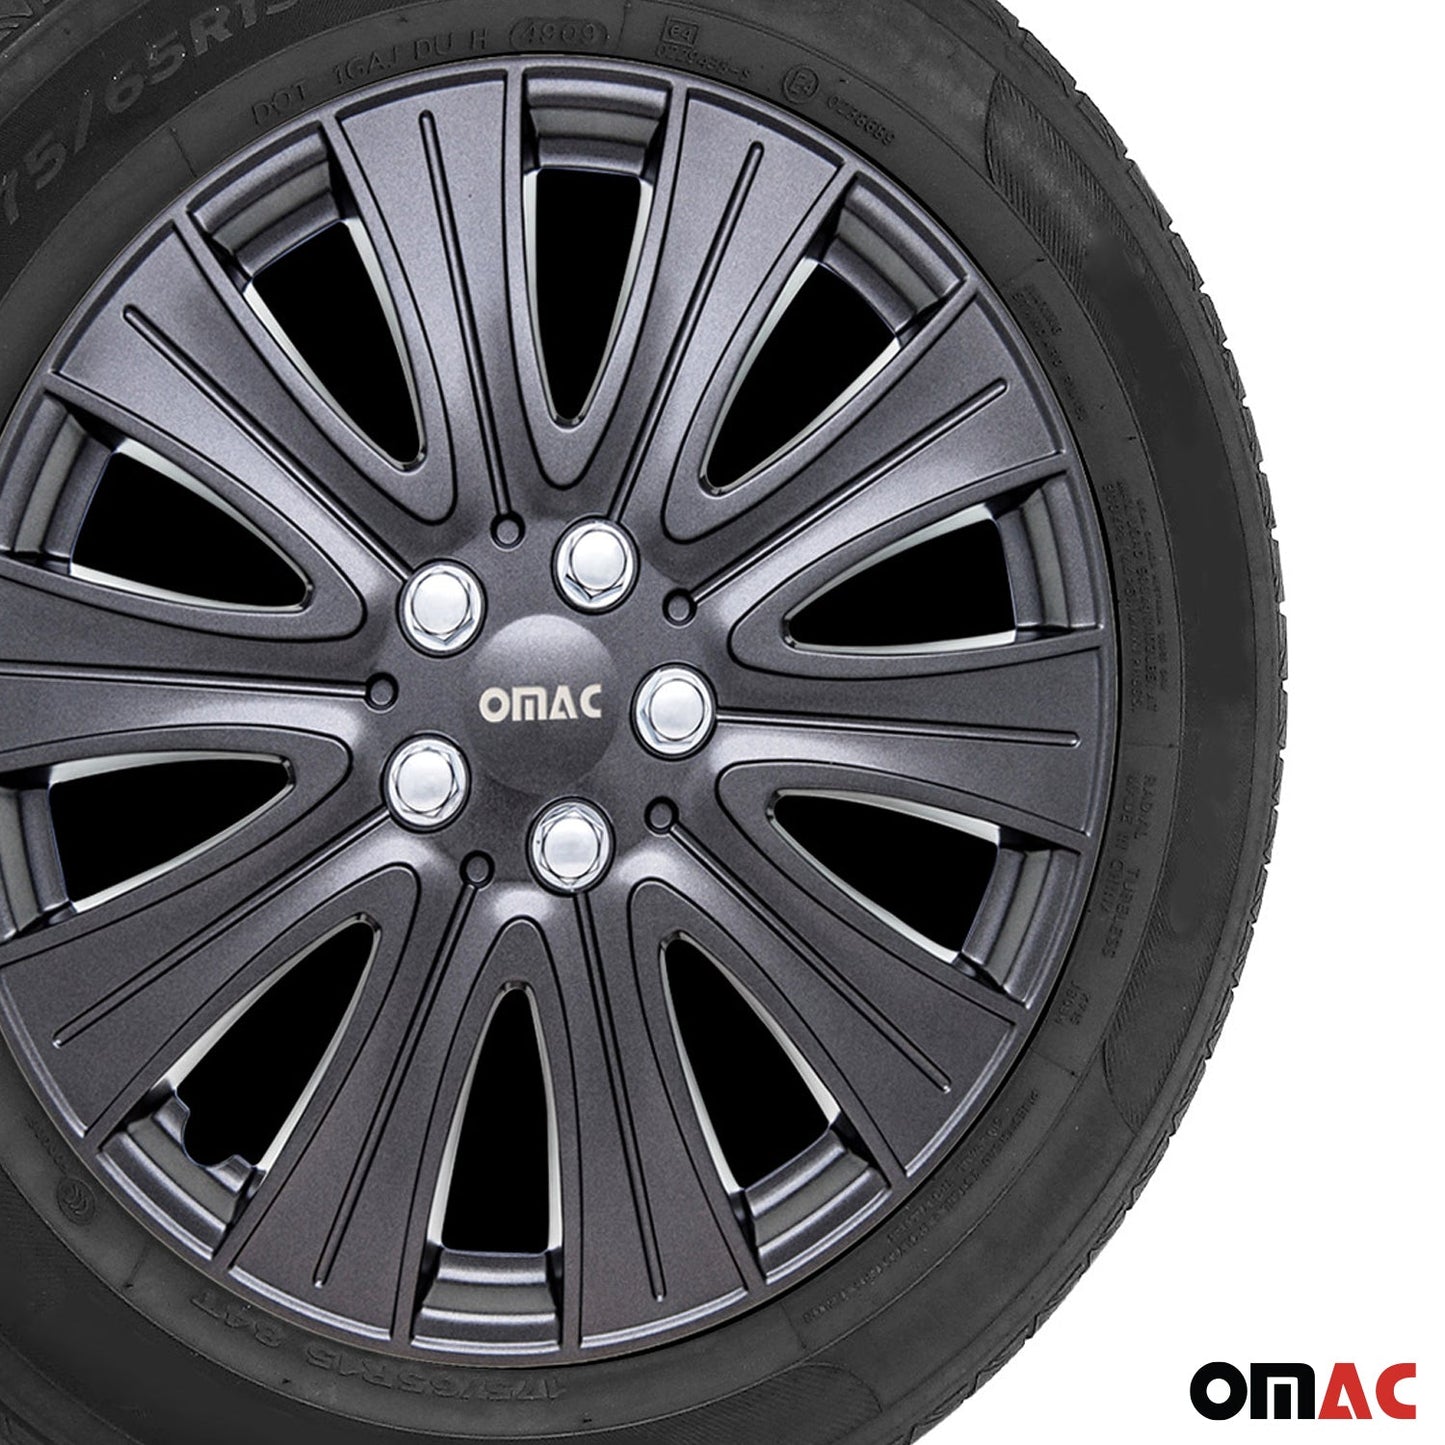 OMAC 14" Wheel Covers Guard Hub Caps Durable Snap On ABS Metal Silver 4x OMAC-WE40-GM14